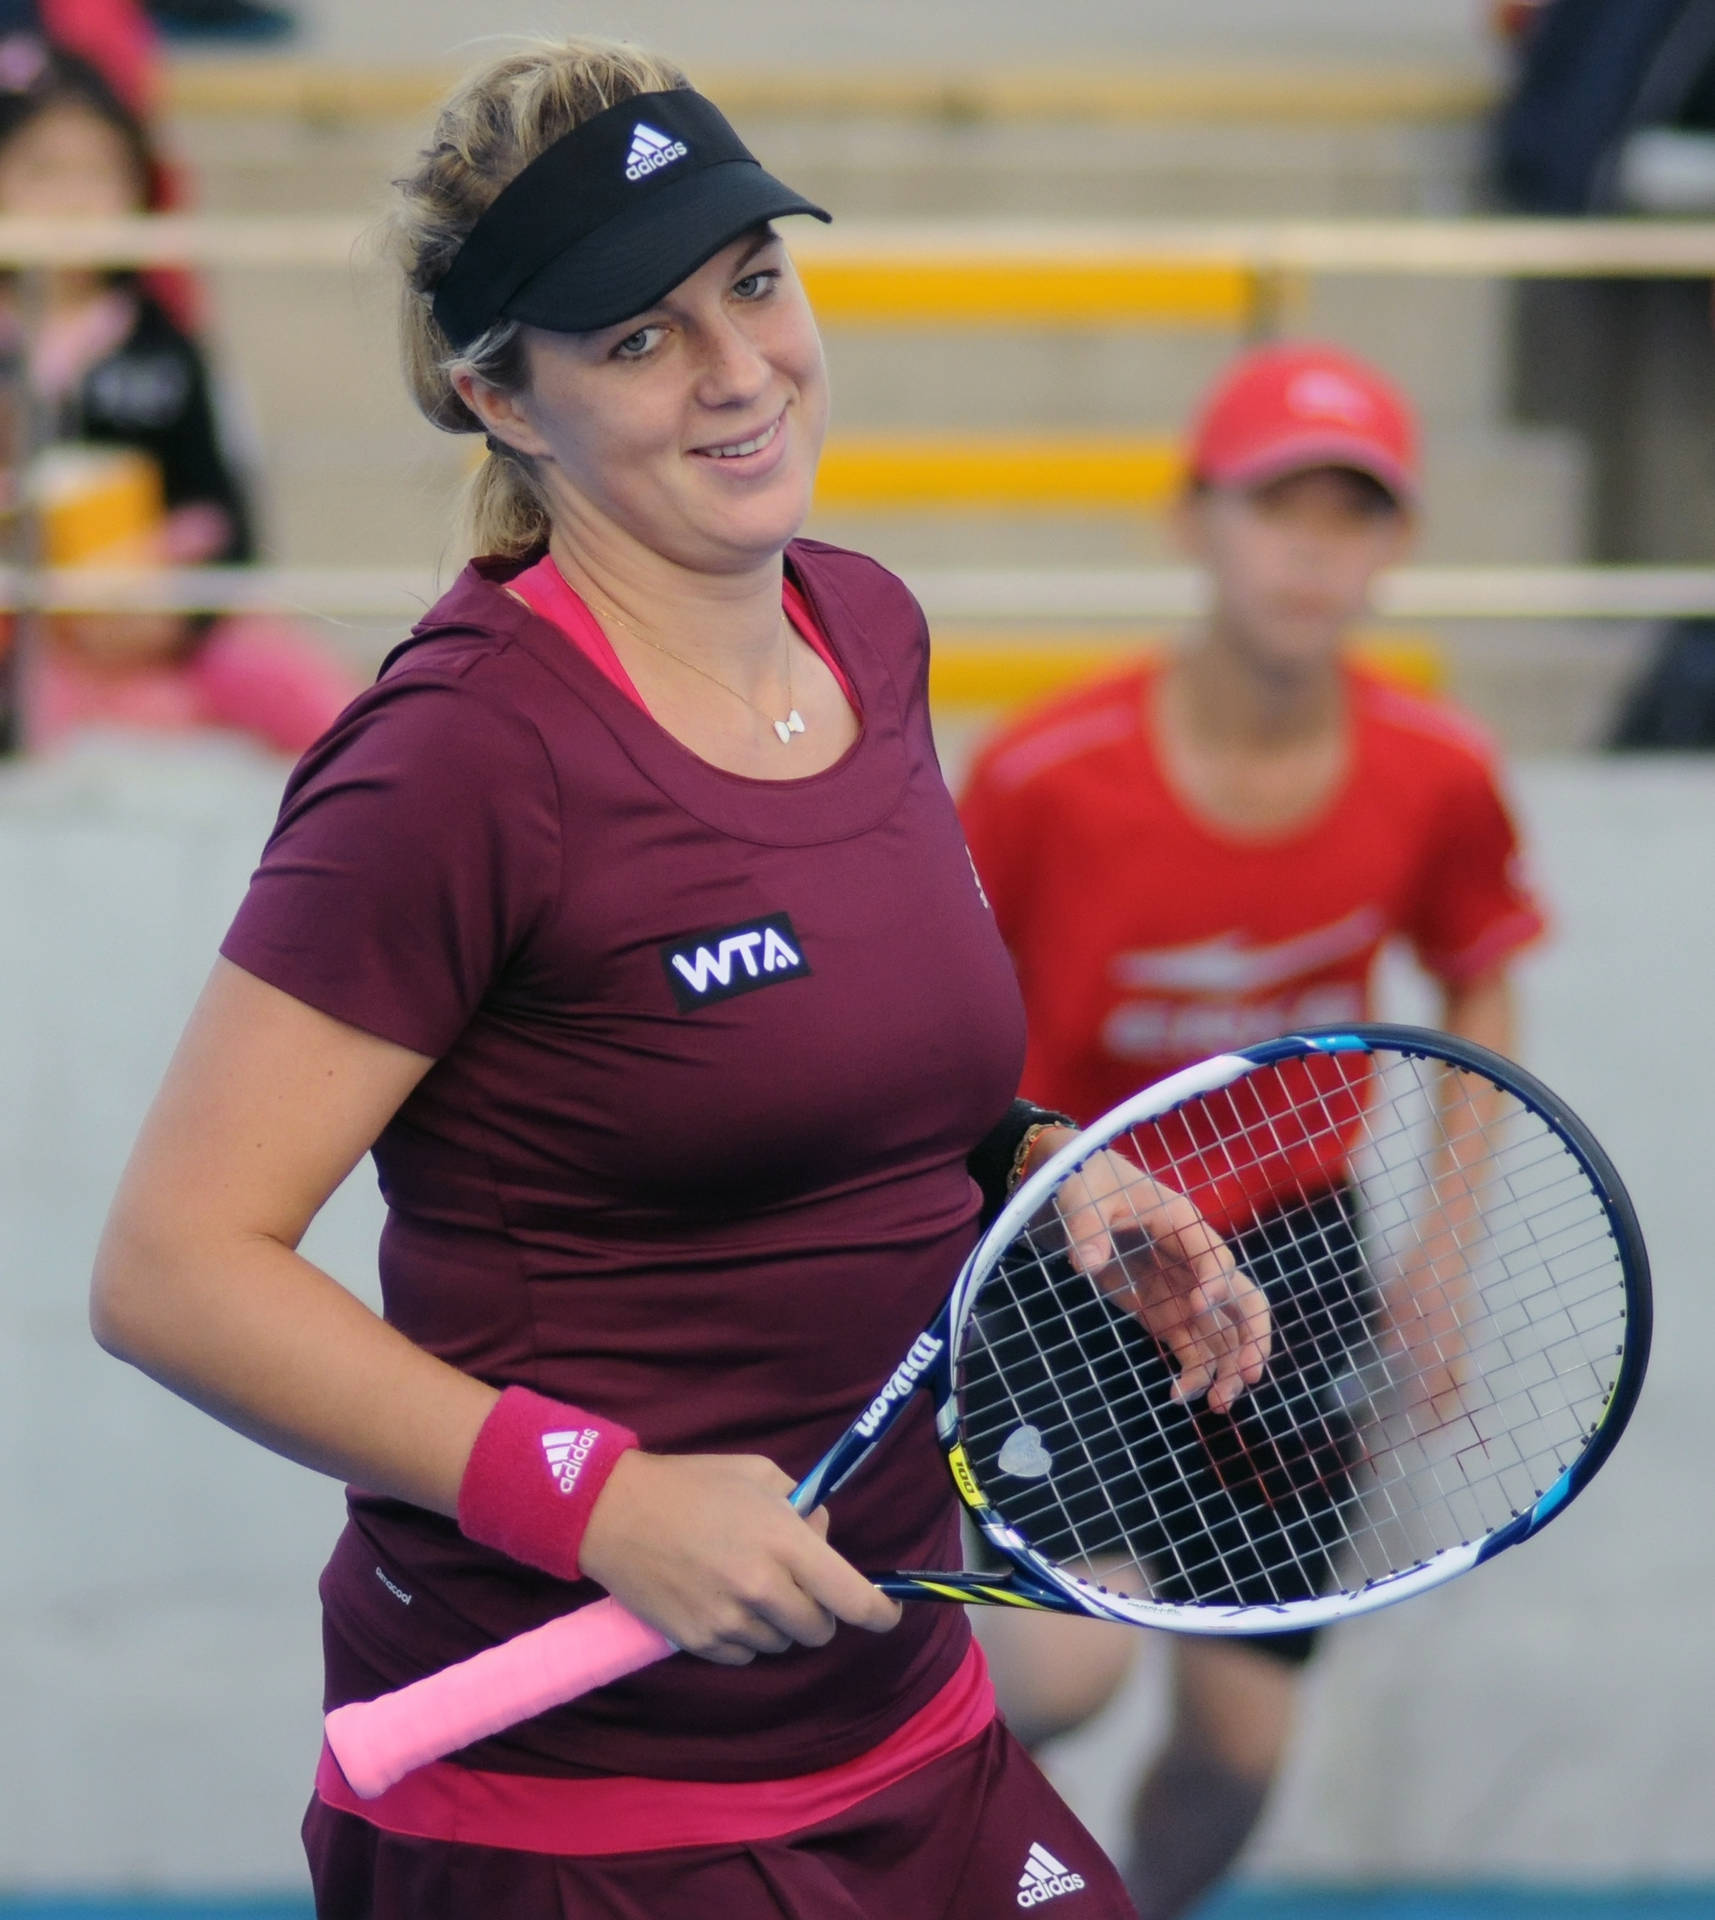 Anastasia Pavlyuchenkova In Action On The Tennis Court Wallpaper